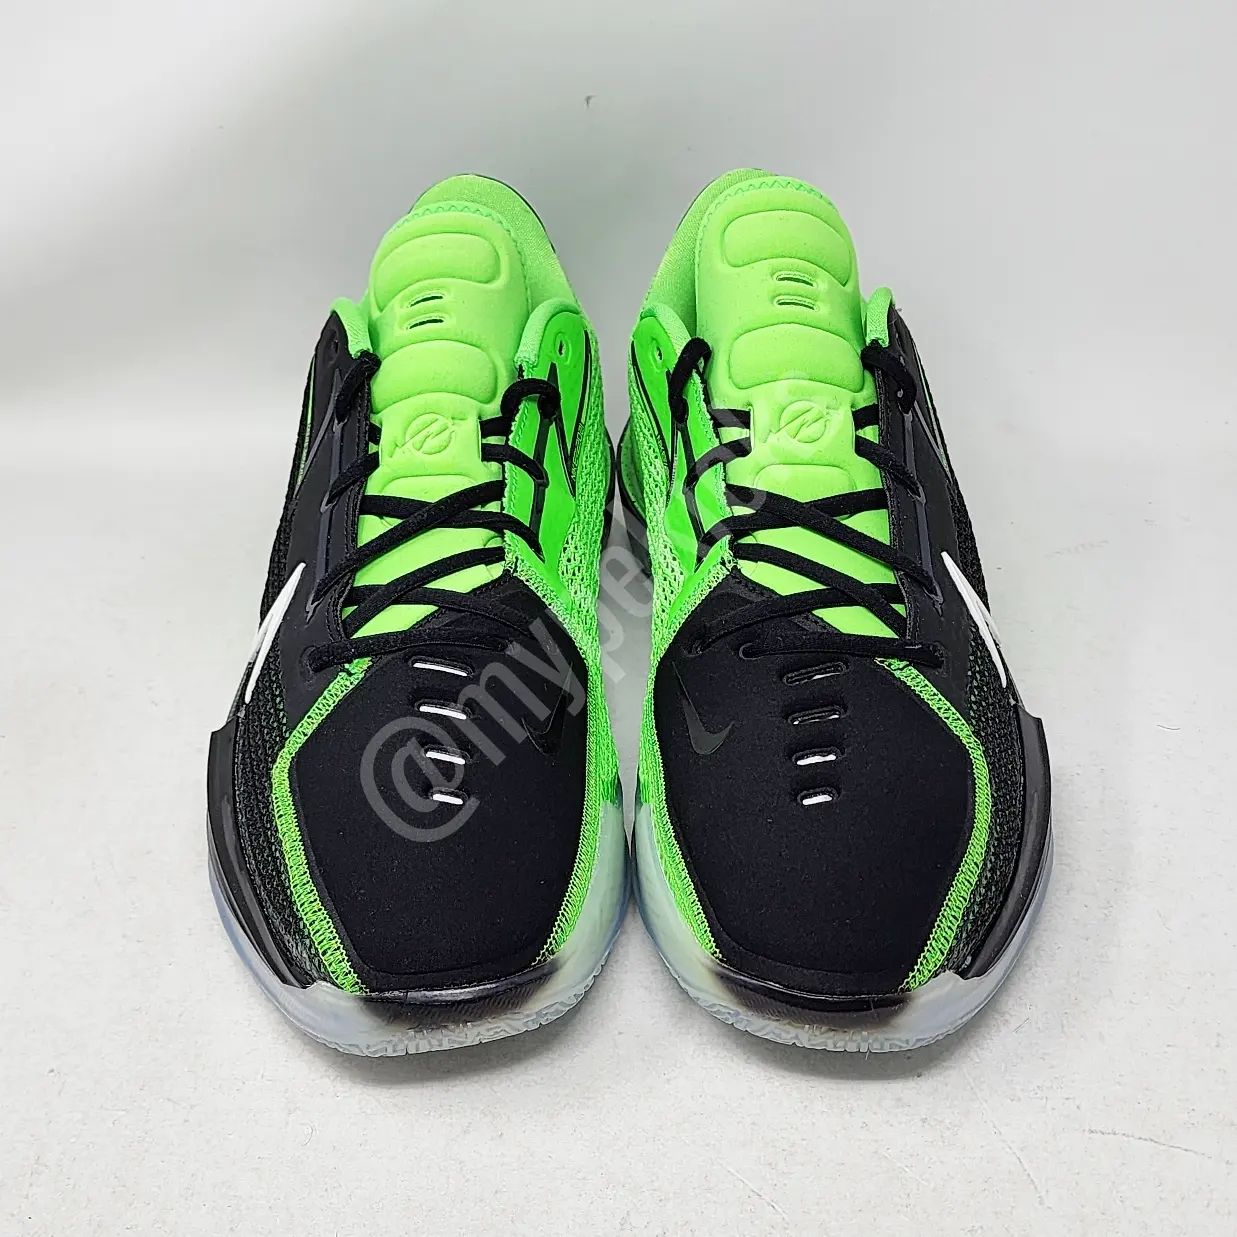 Nike G.T. Cut - Cade Cunningham Detroit Pistons PE